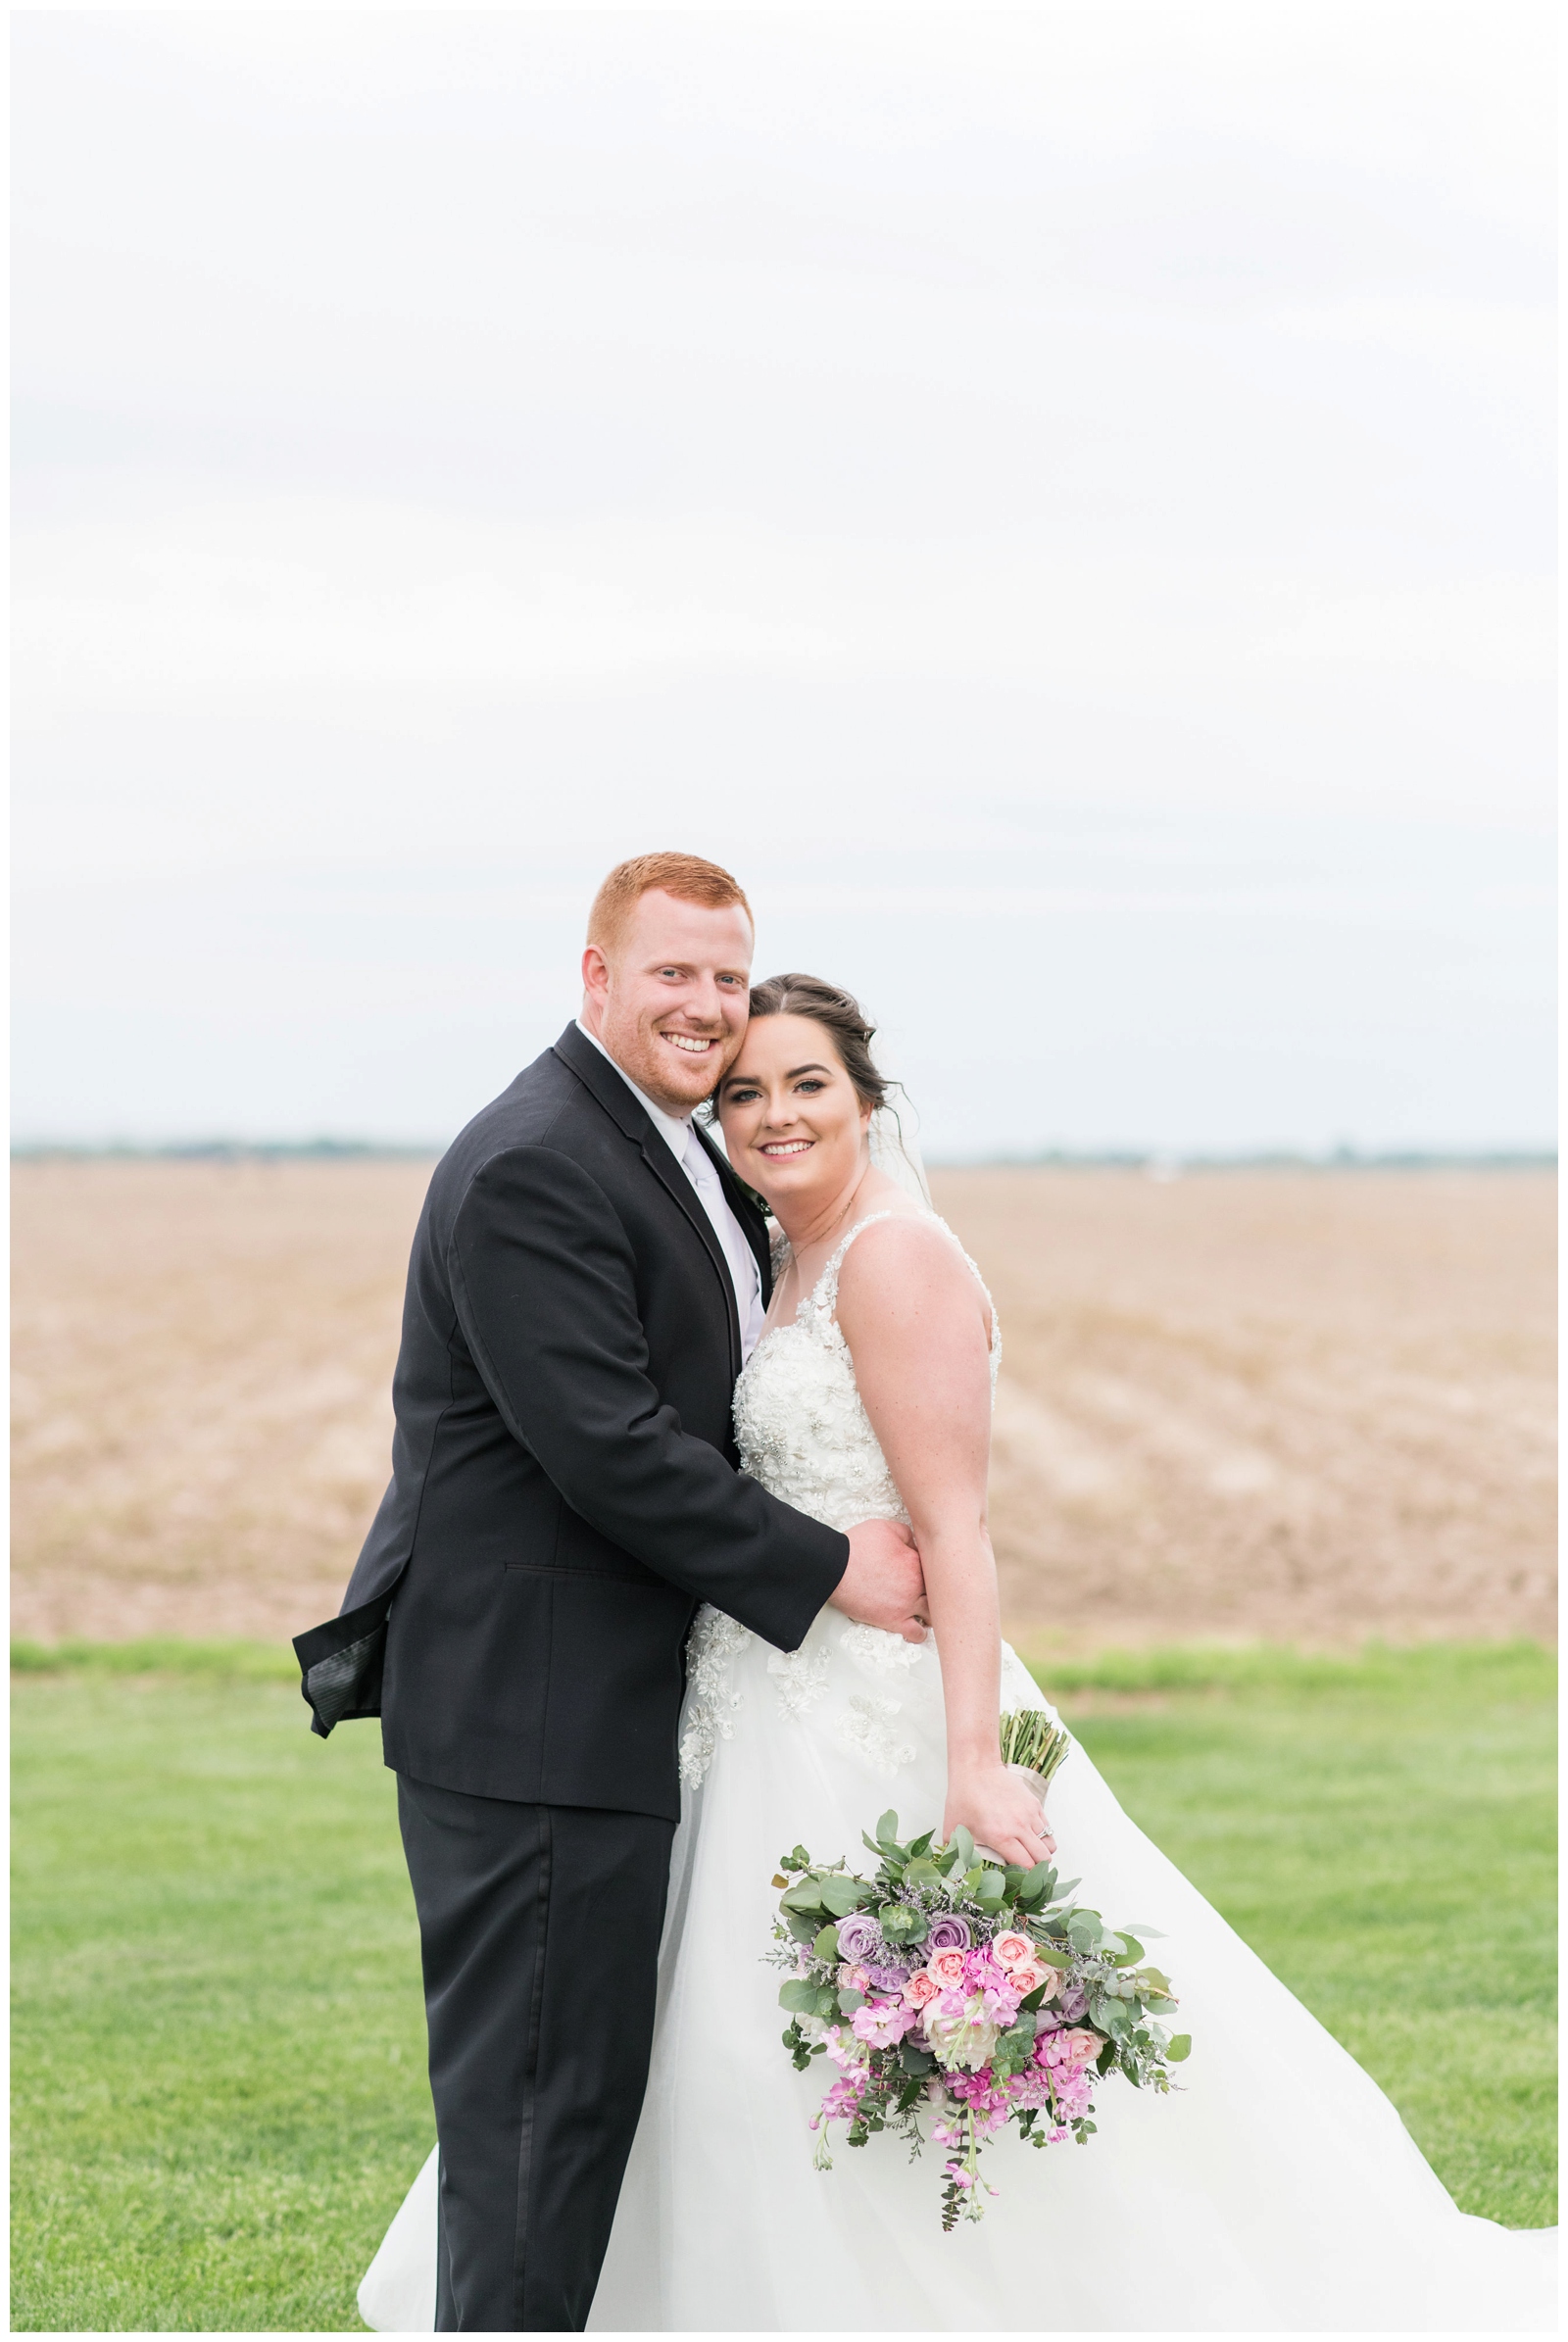 Bride and Groom smile during Ohio wedding portraits on farm